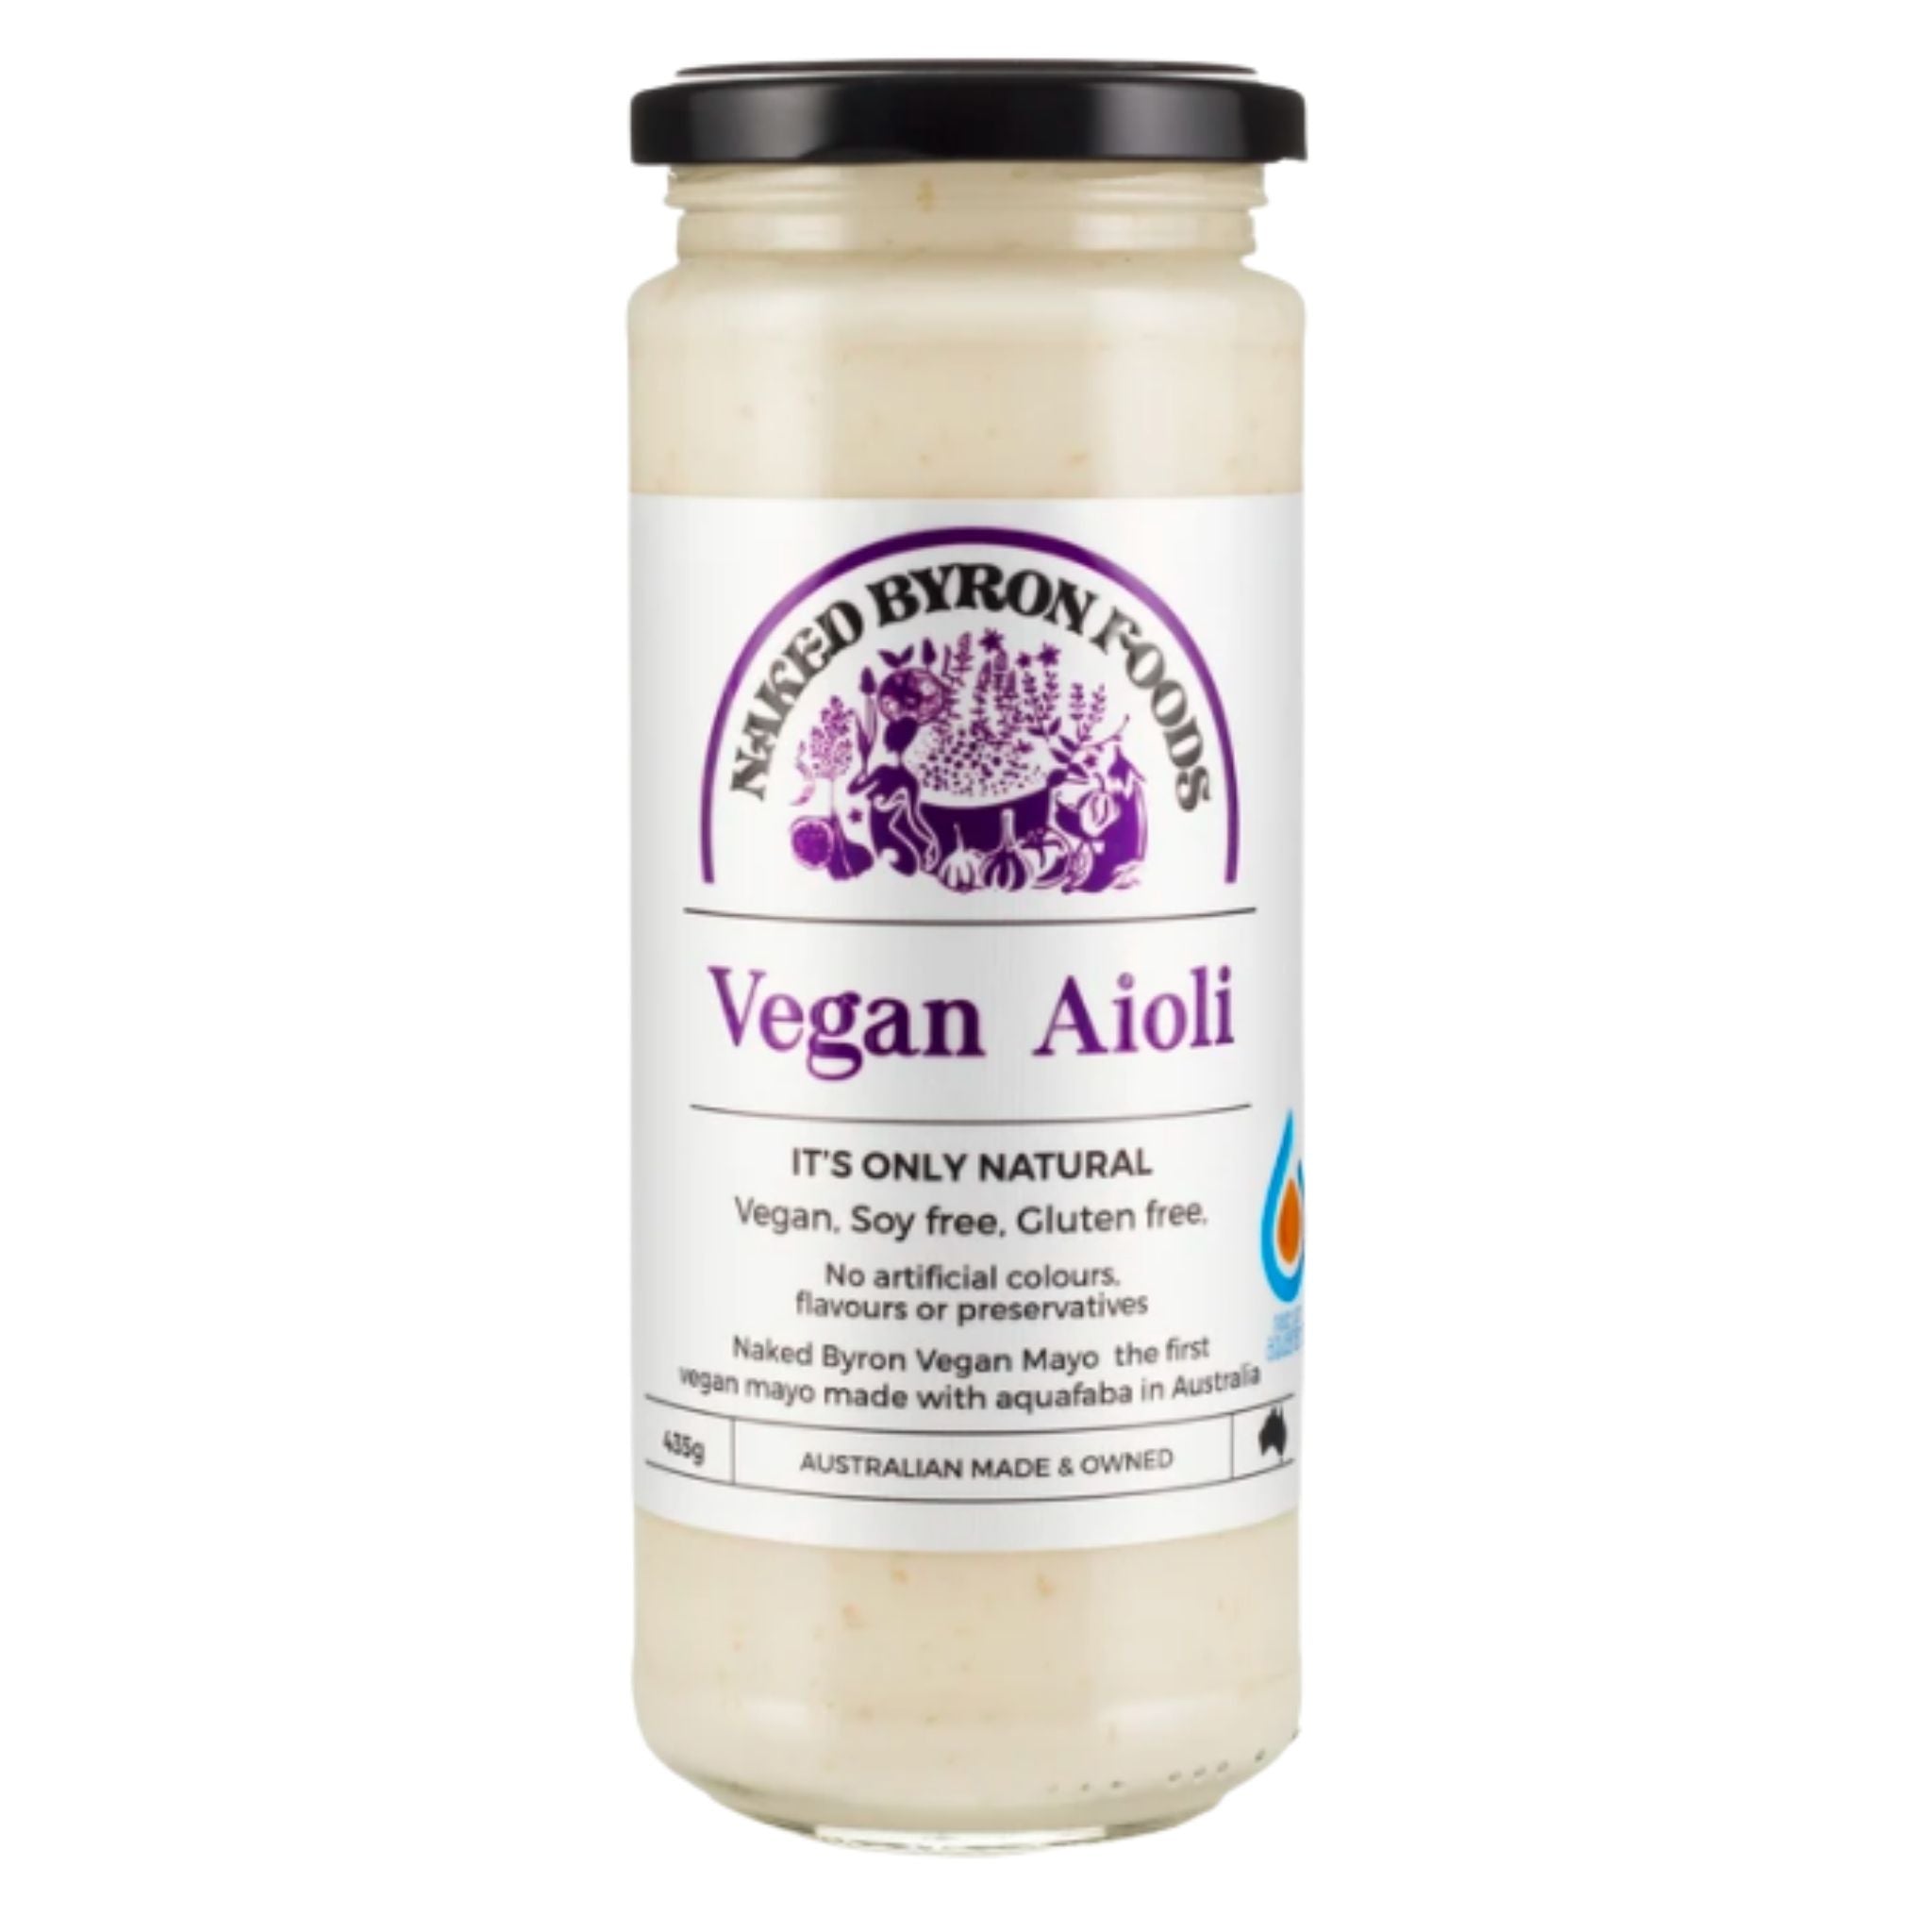 Vegan Aioli - Naked Byron Foods. 235g